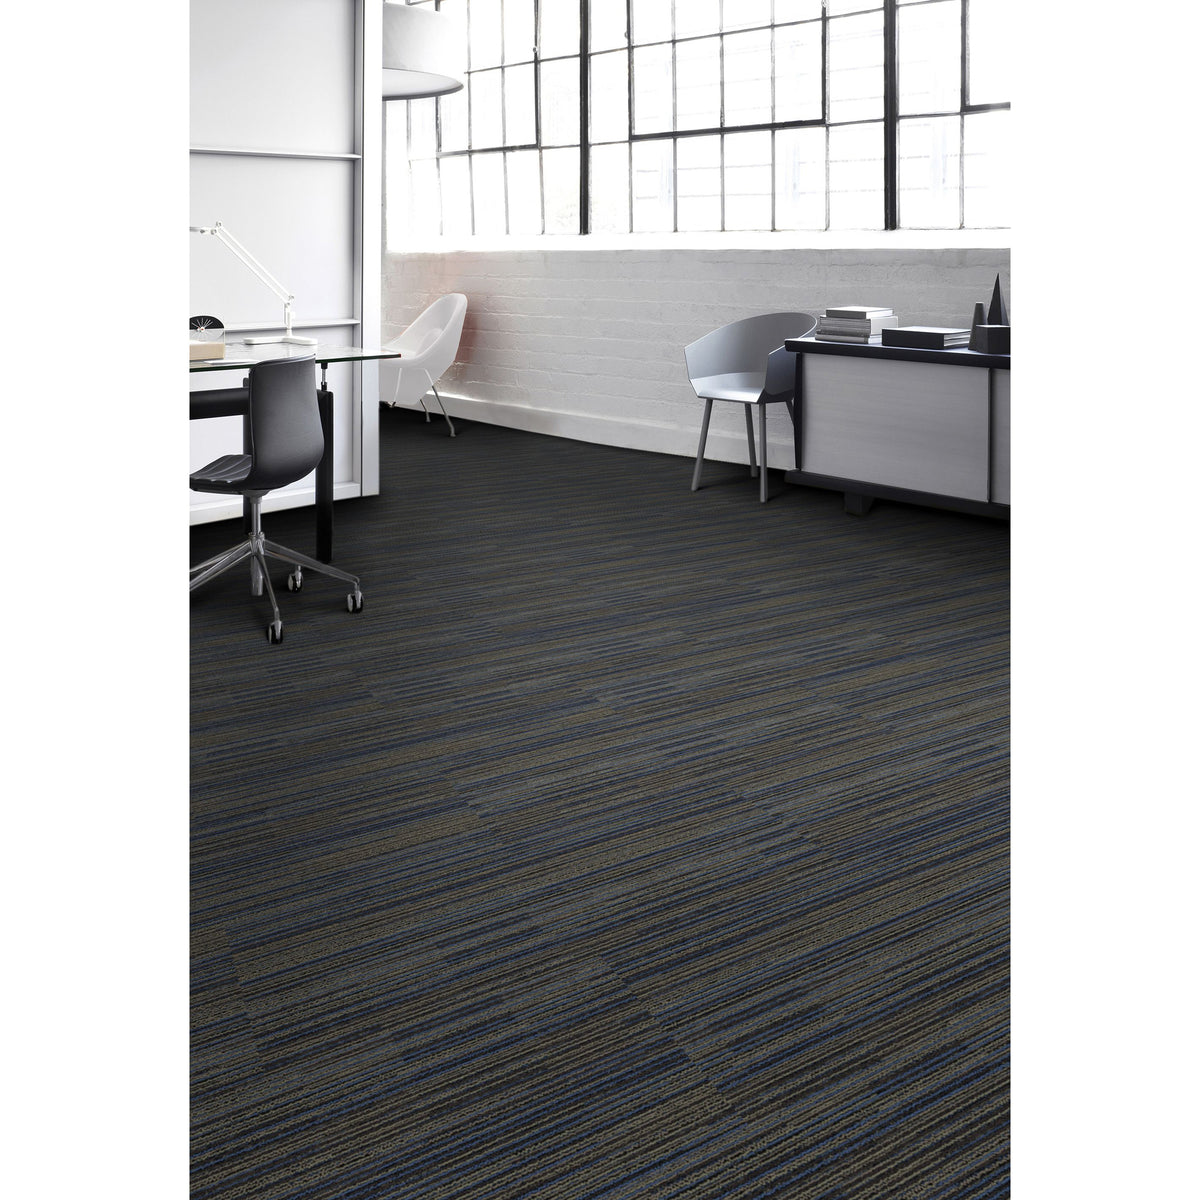 Aladdin Commercial - Cognitive Plank - Visual Awakening - Carpet Tile - Awareness